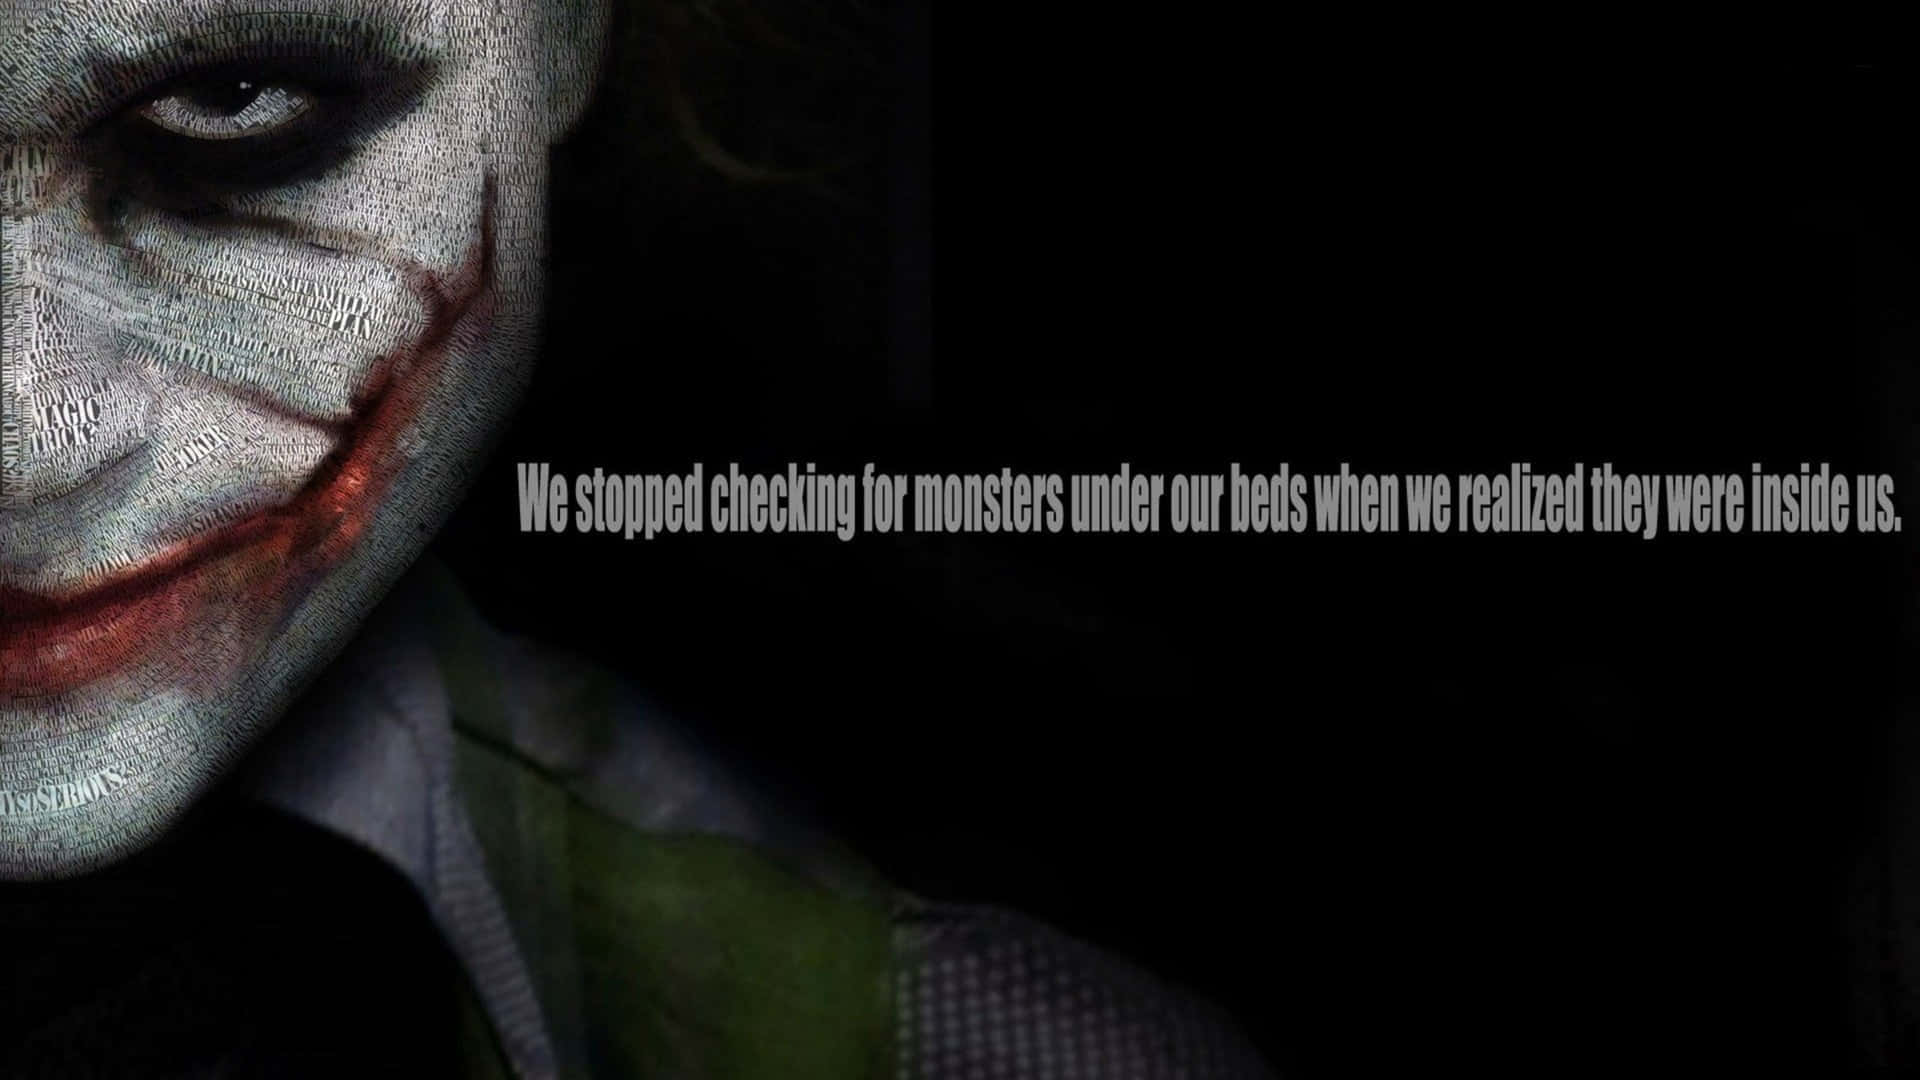 “The Dark Knight - Joker in 4K Ultra HD” Wallpaper